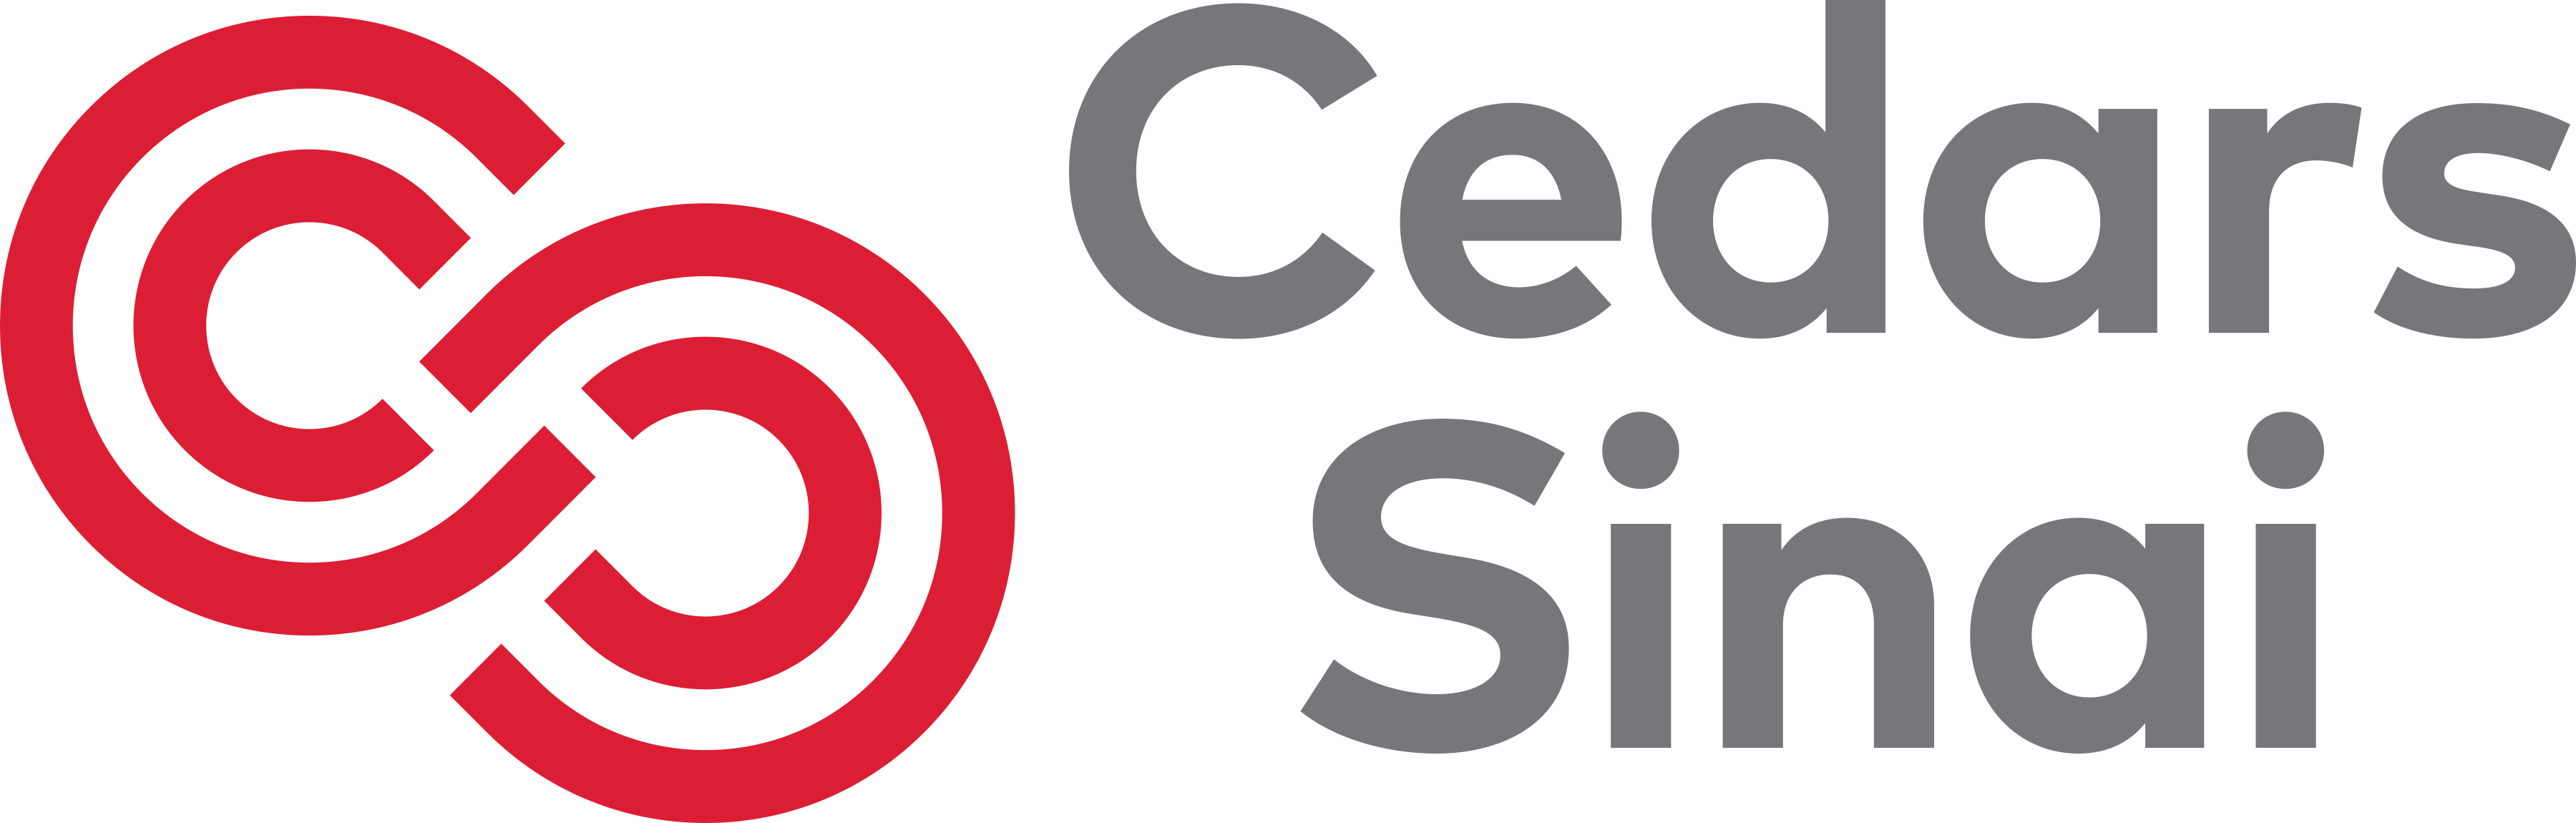 Cedars Sponsor Logo